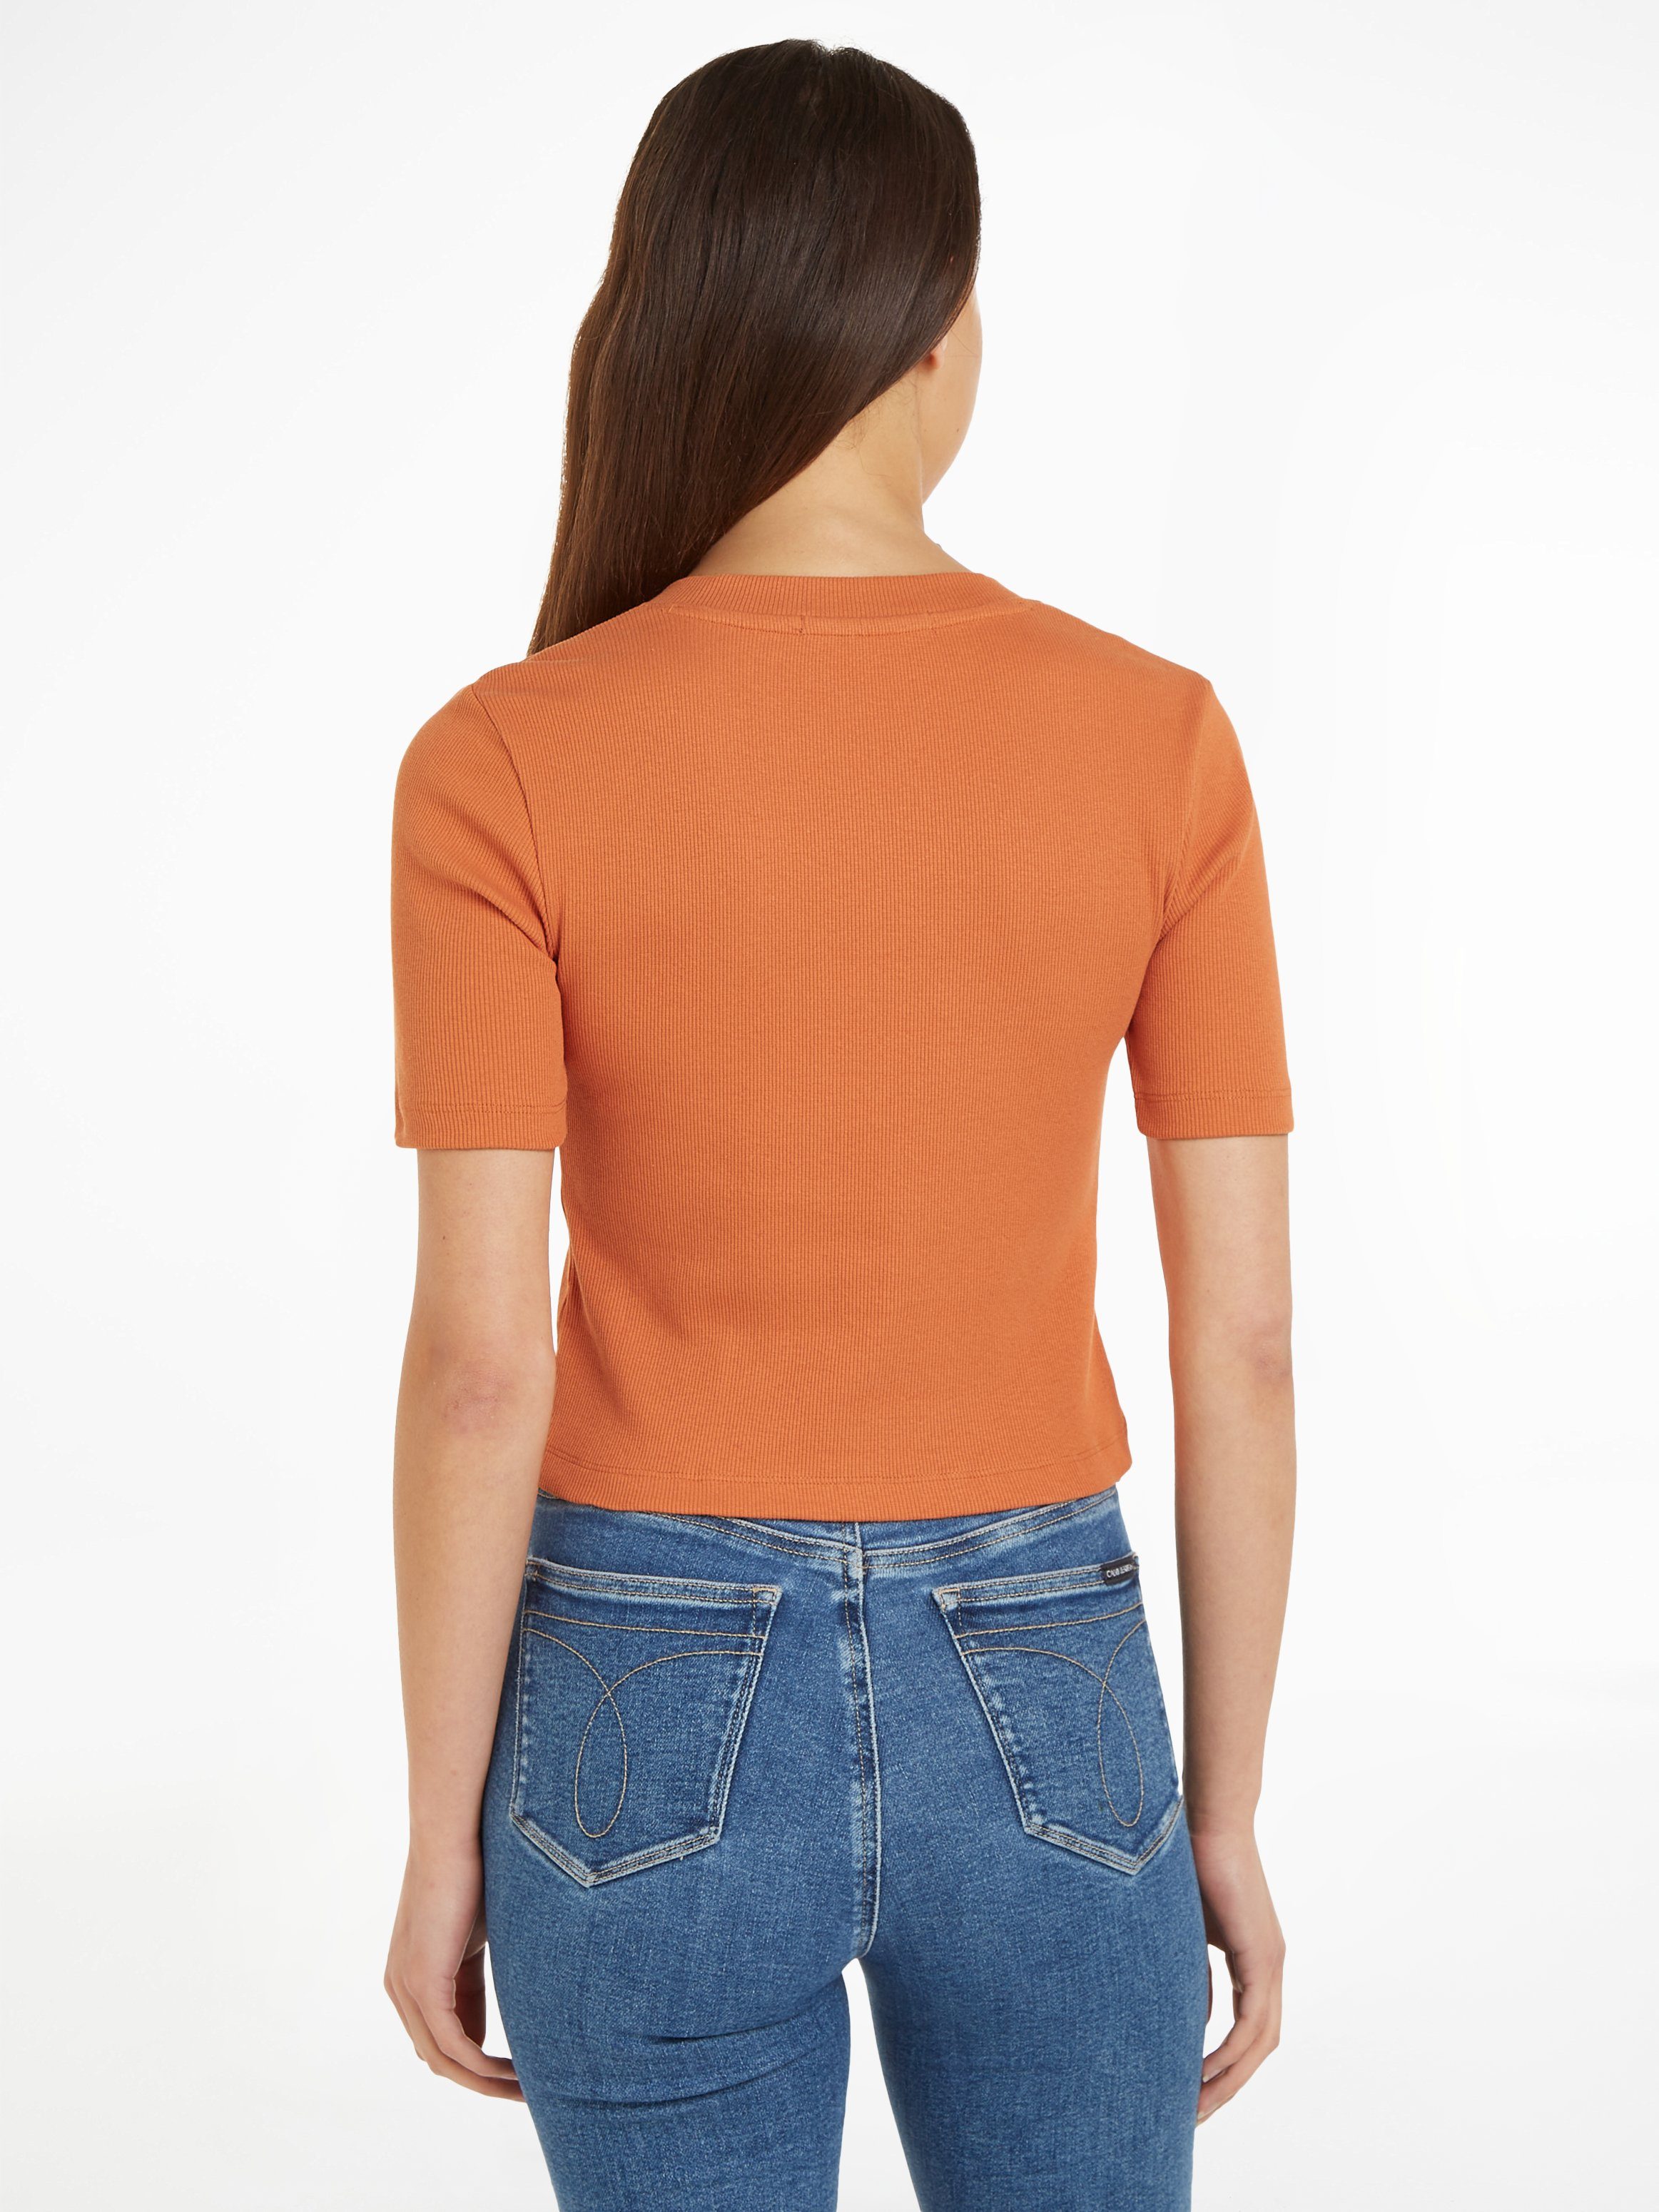 Klein V-Shirt Calvin orange Jeans